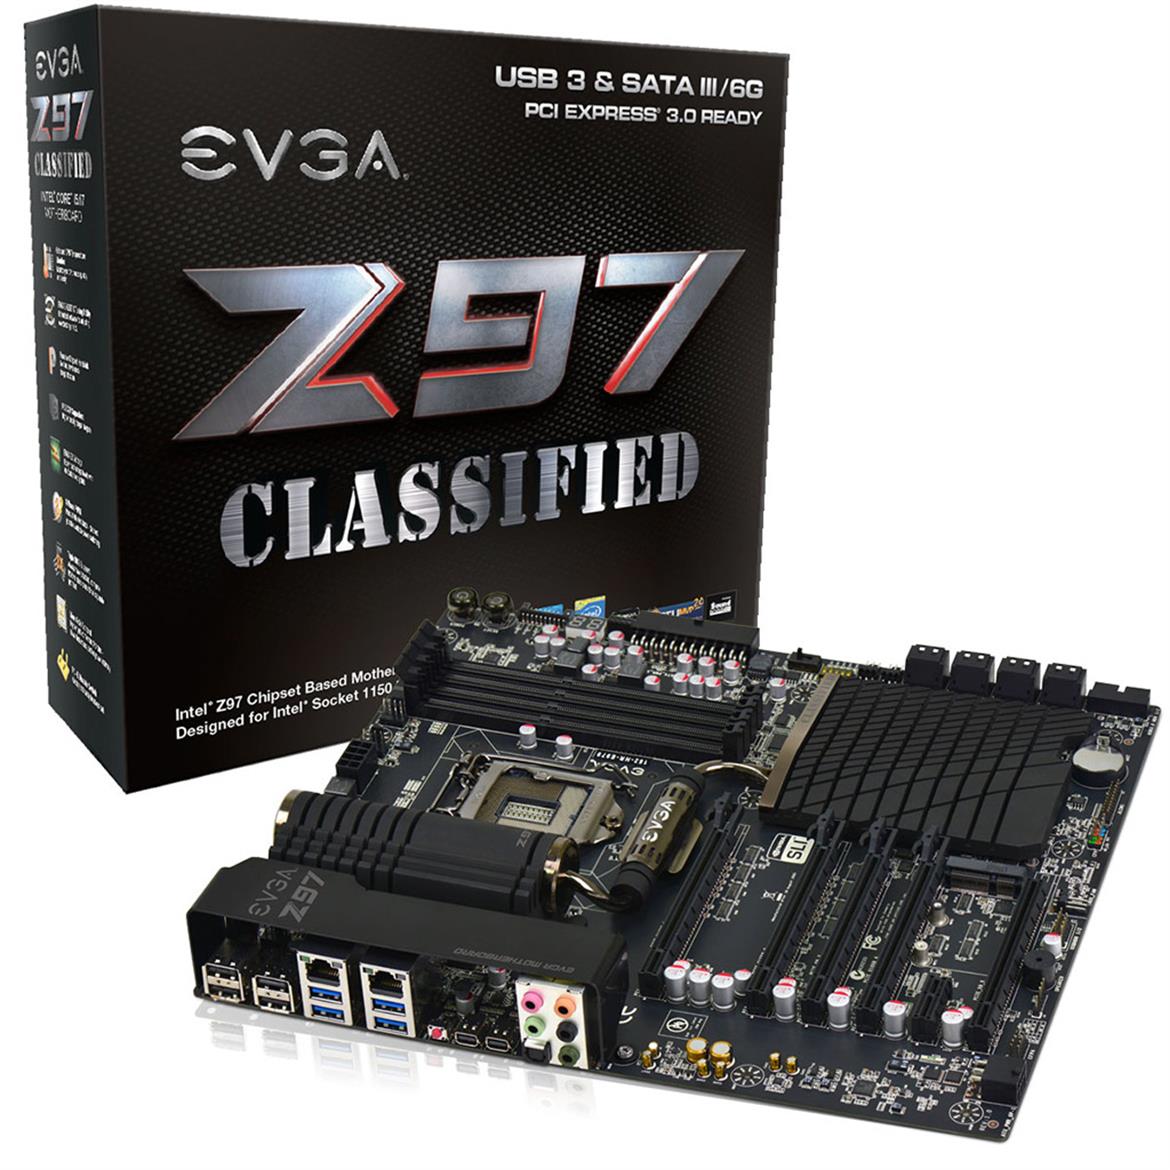 Z97 Motherboard Round Up: EVGA, MSI, Gigabyte